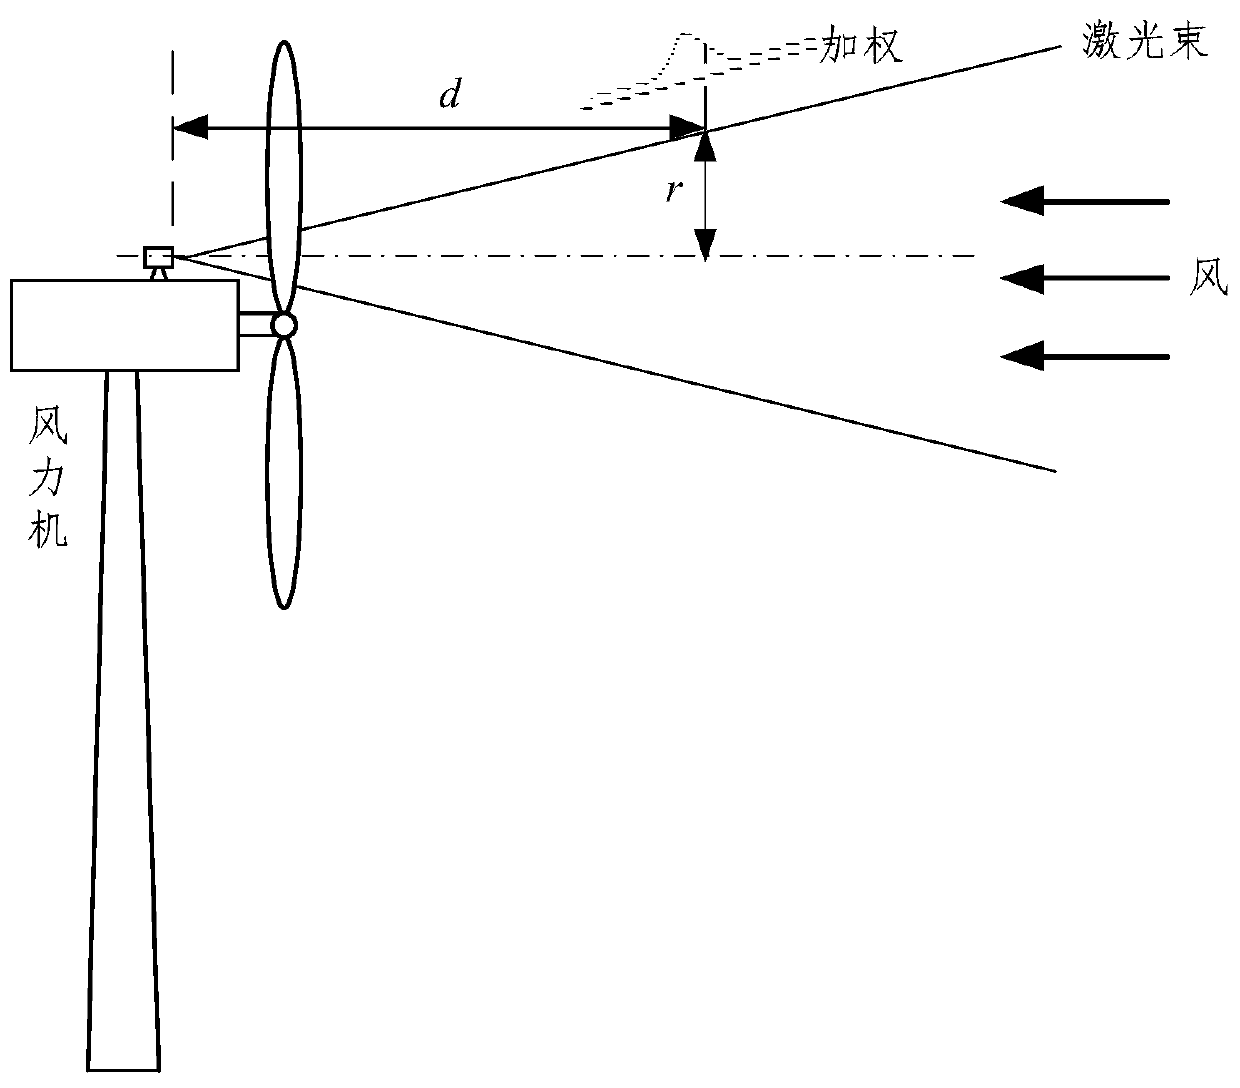 A wind turbine yaw control method